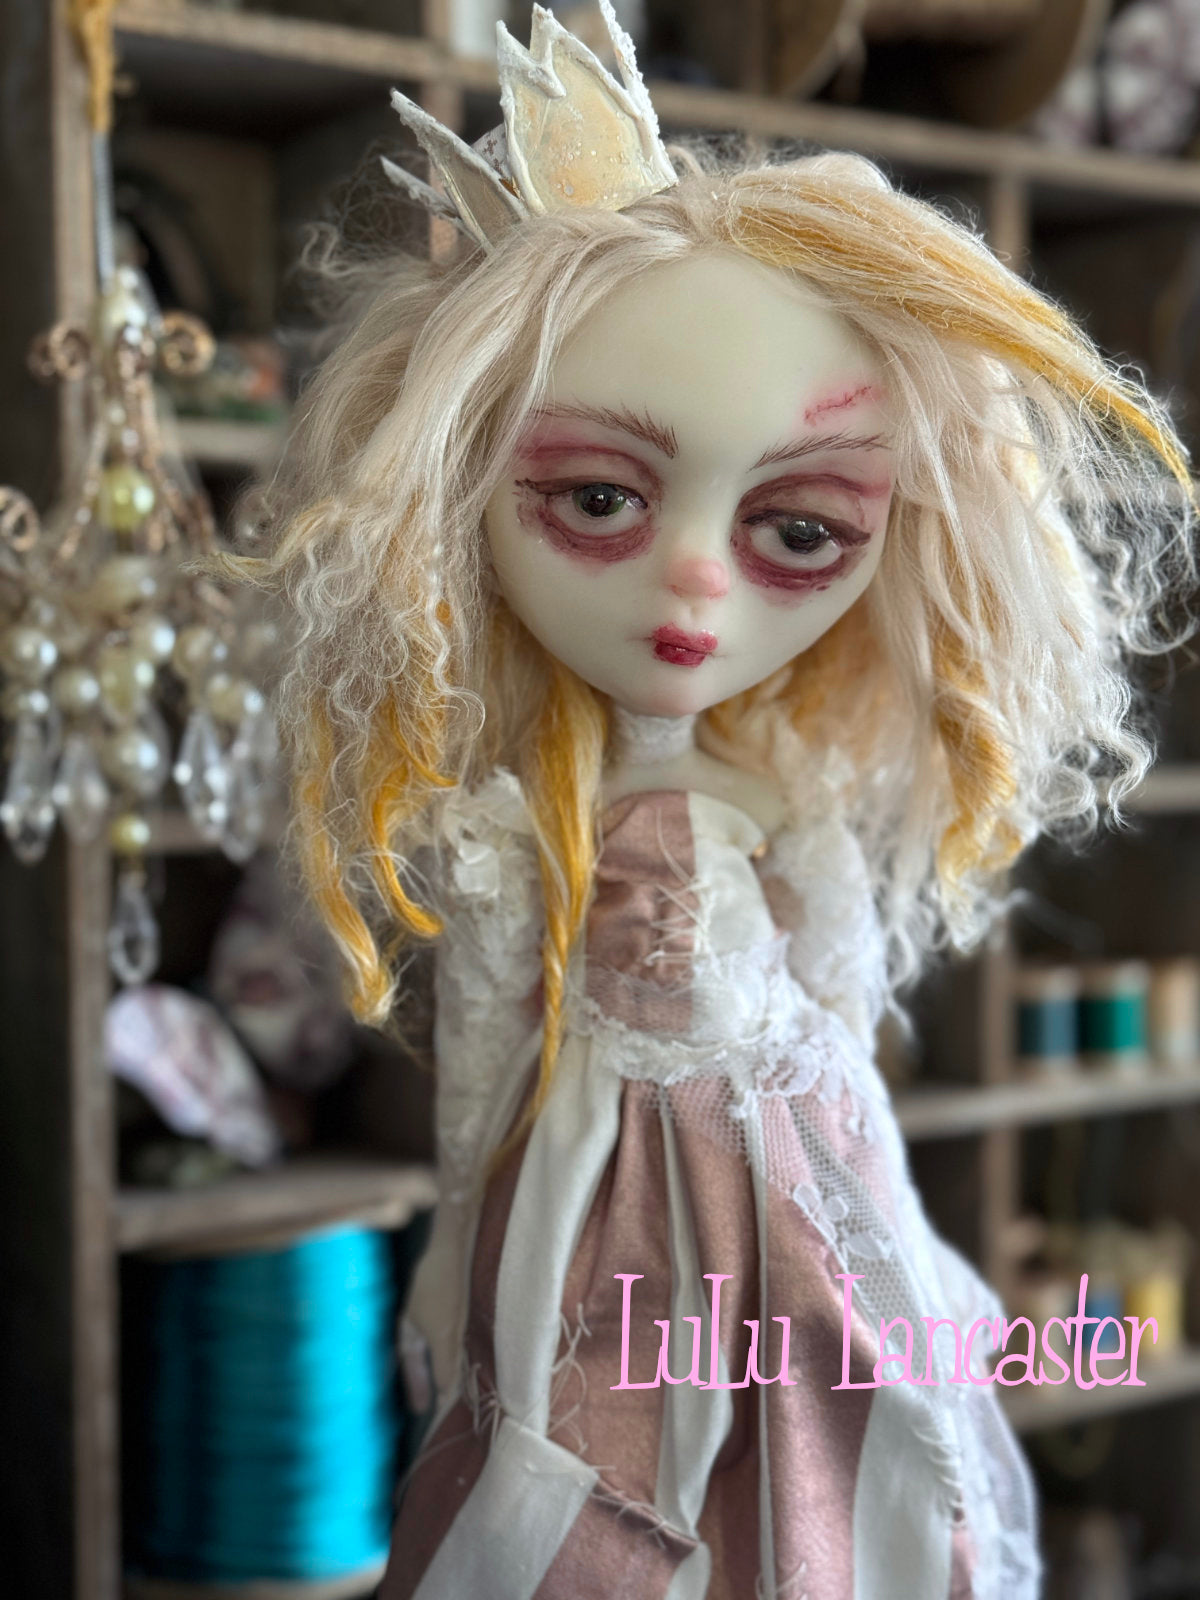 Once upon a time Original LuLu Lancaster Art Doll